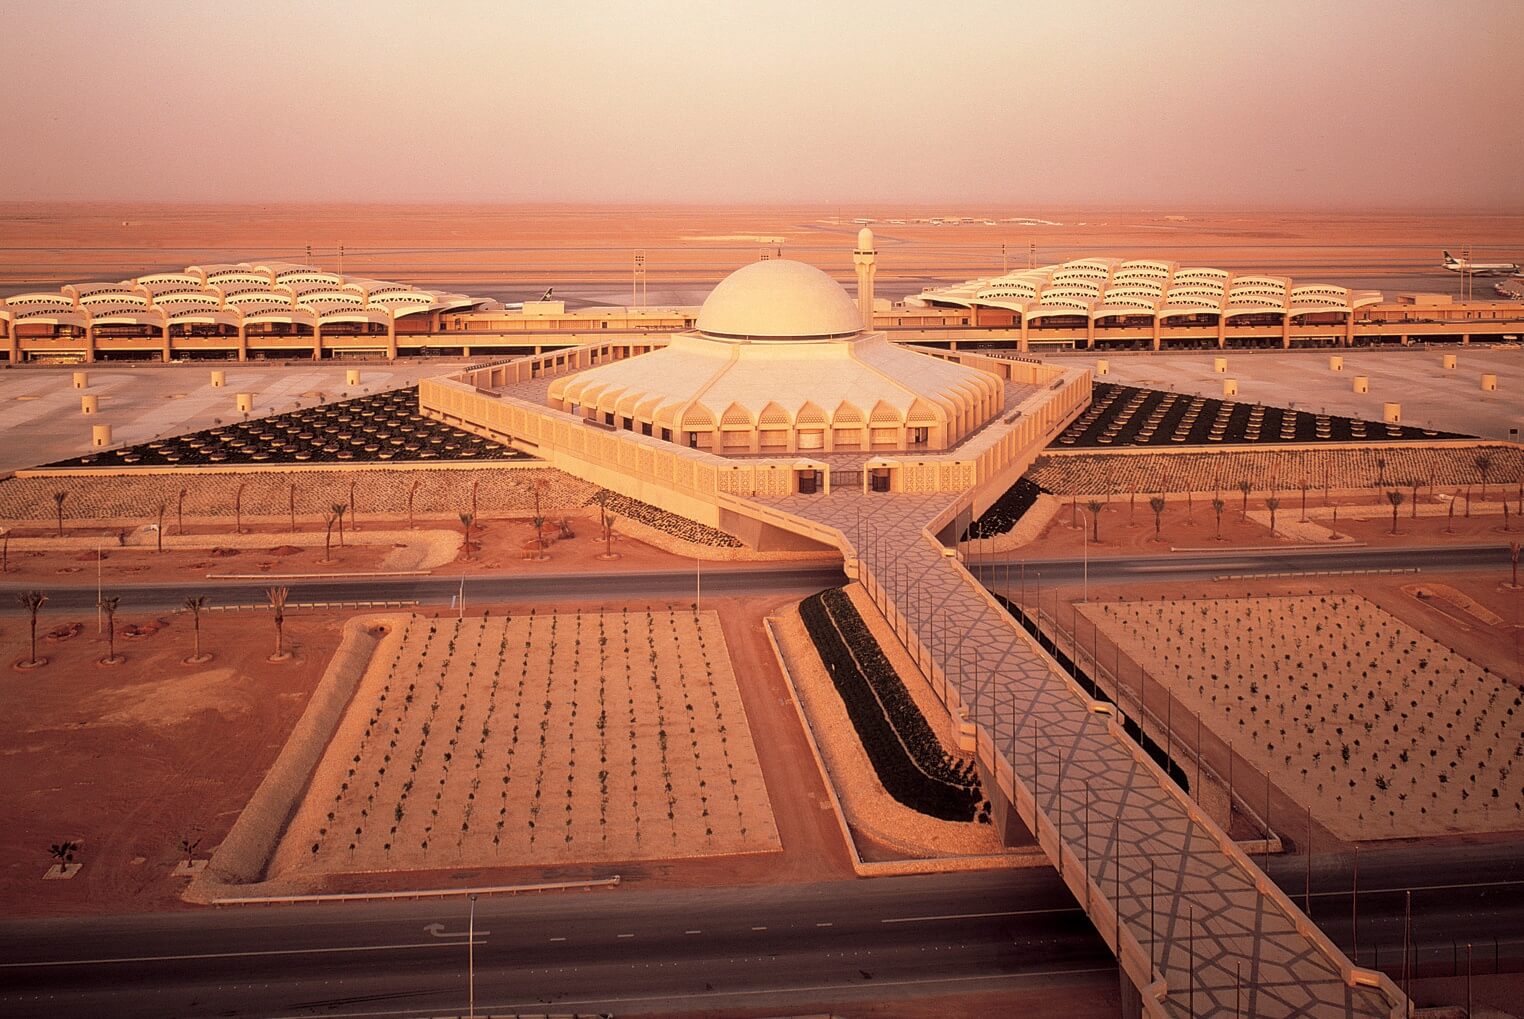 birds eye view of an airport in saudi arabia 